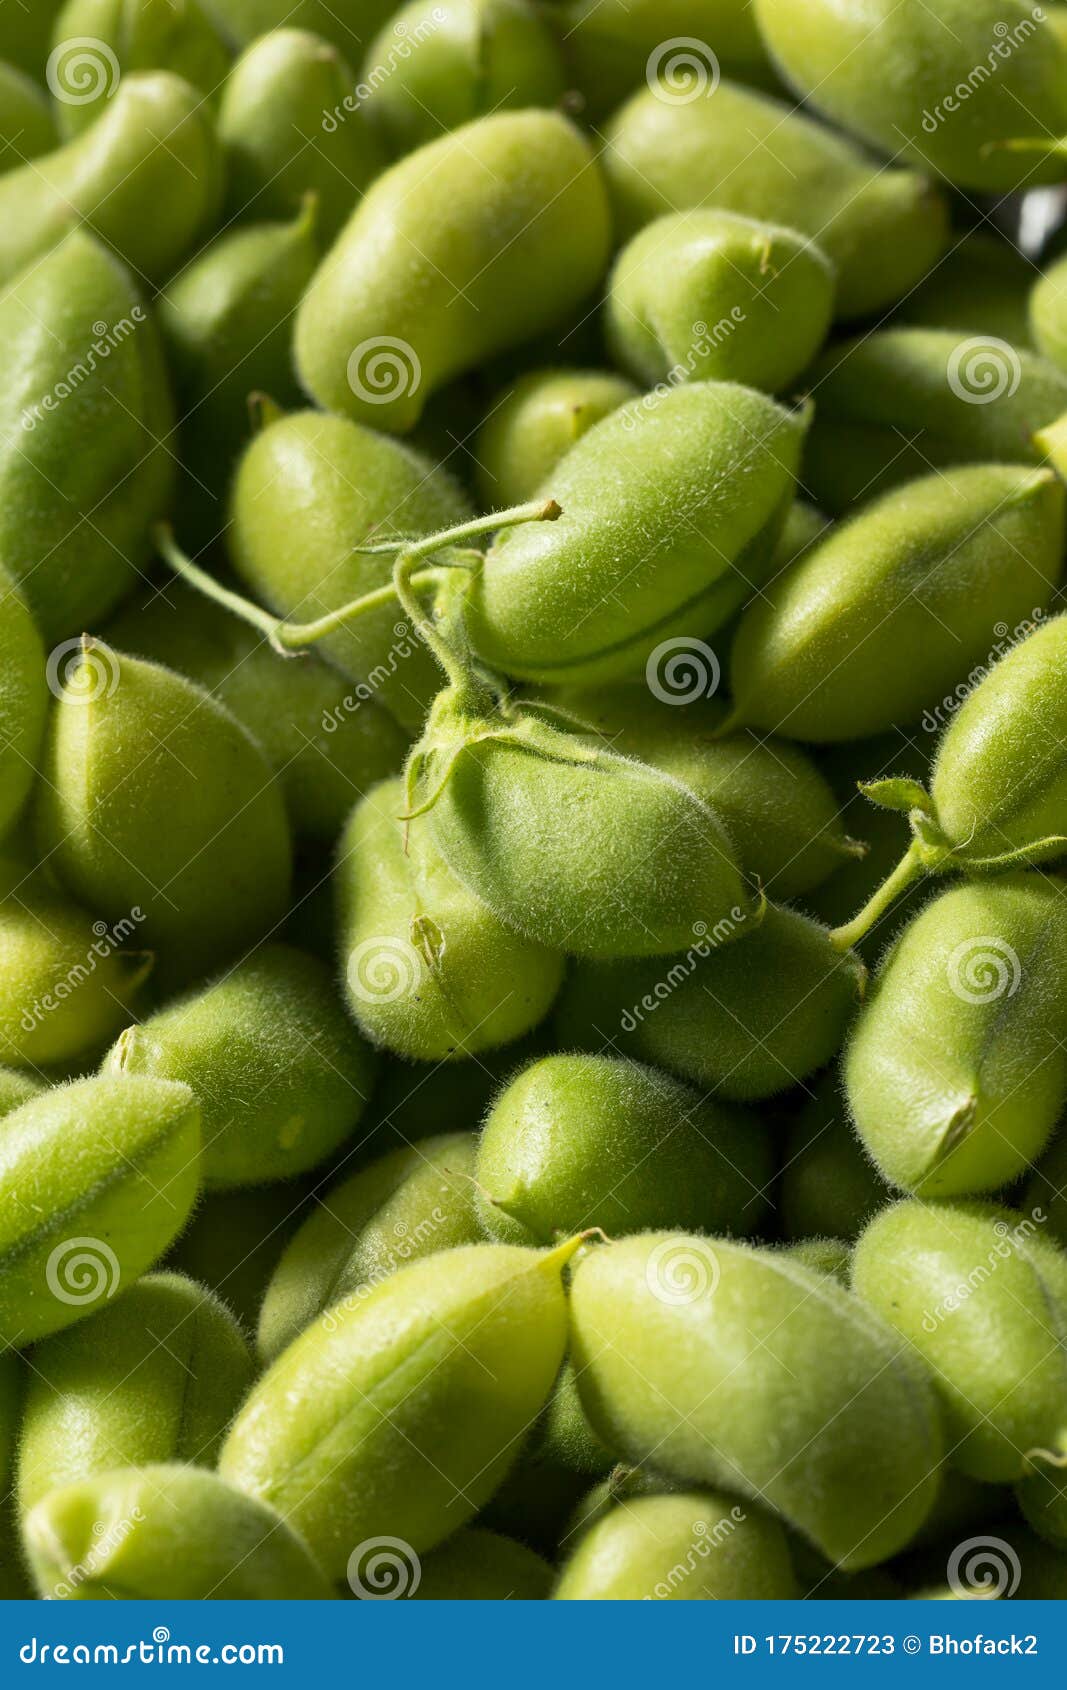 raw green organic  garbanzo beans